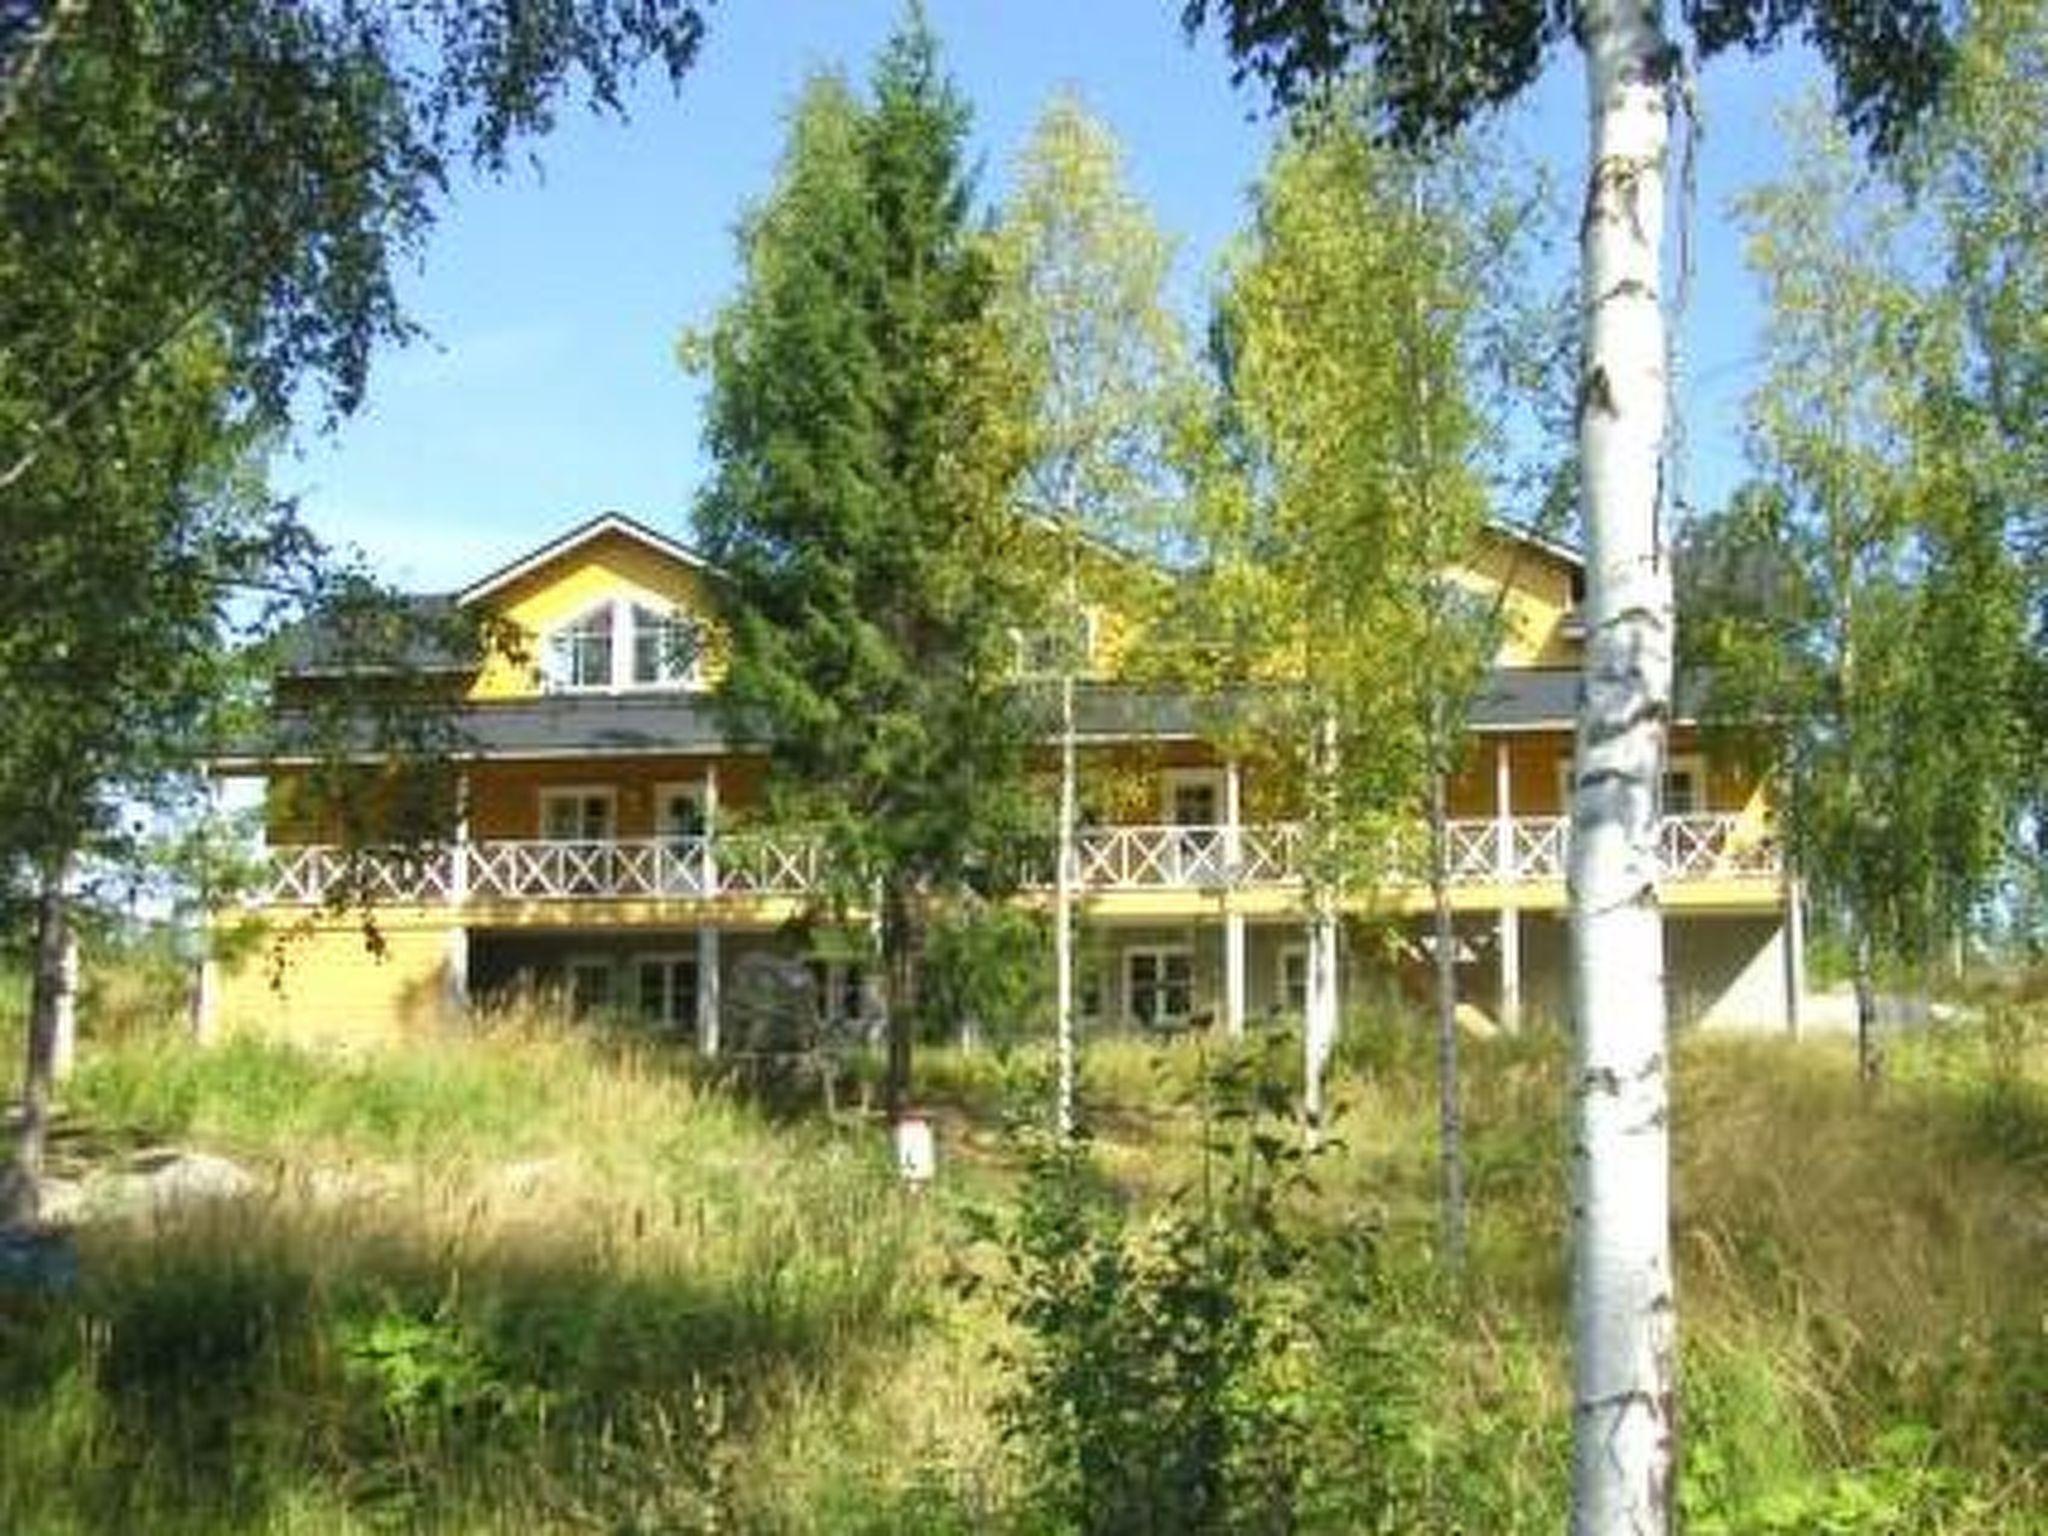 Photo 5 - 7 bedroom House in Kuopio with sauna